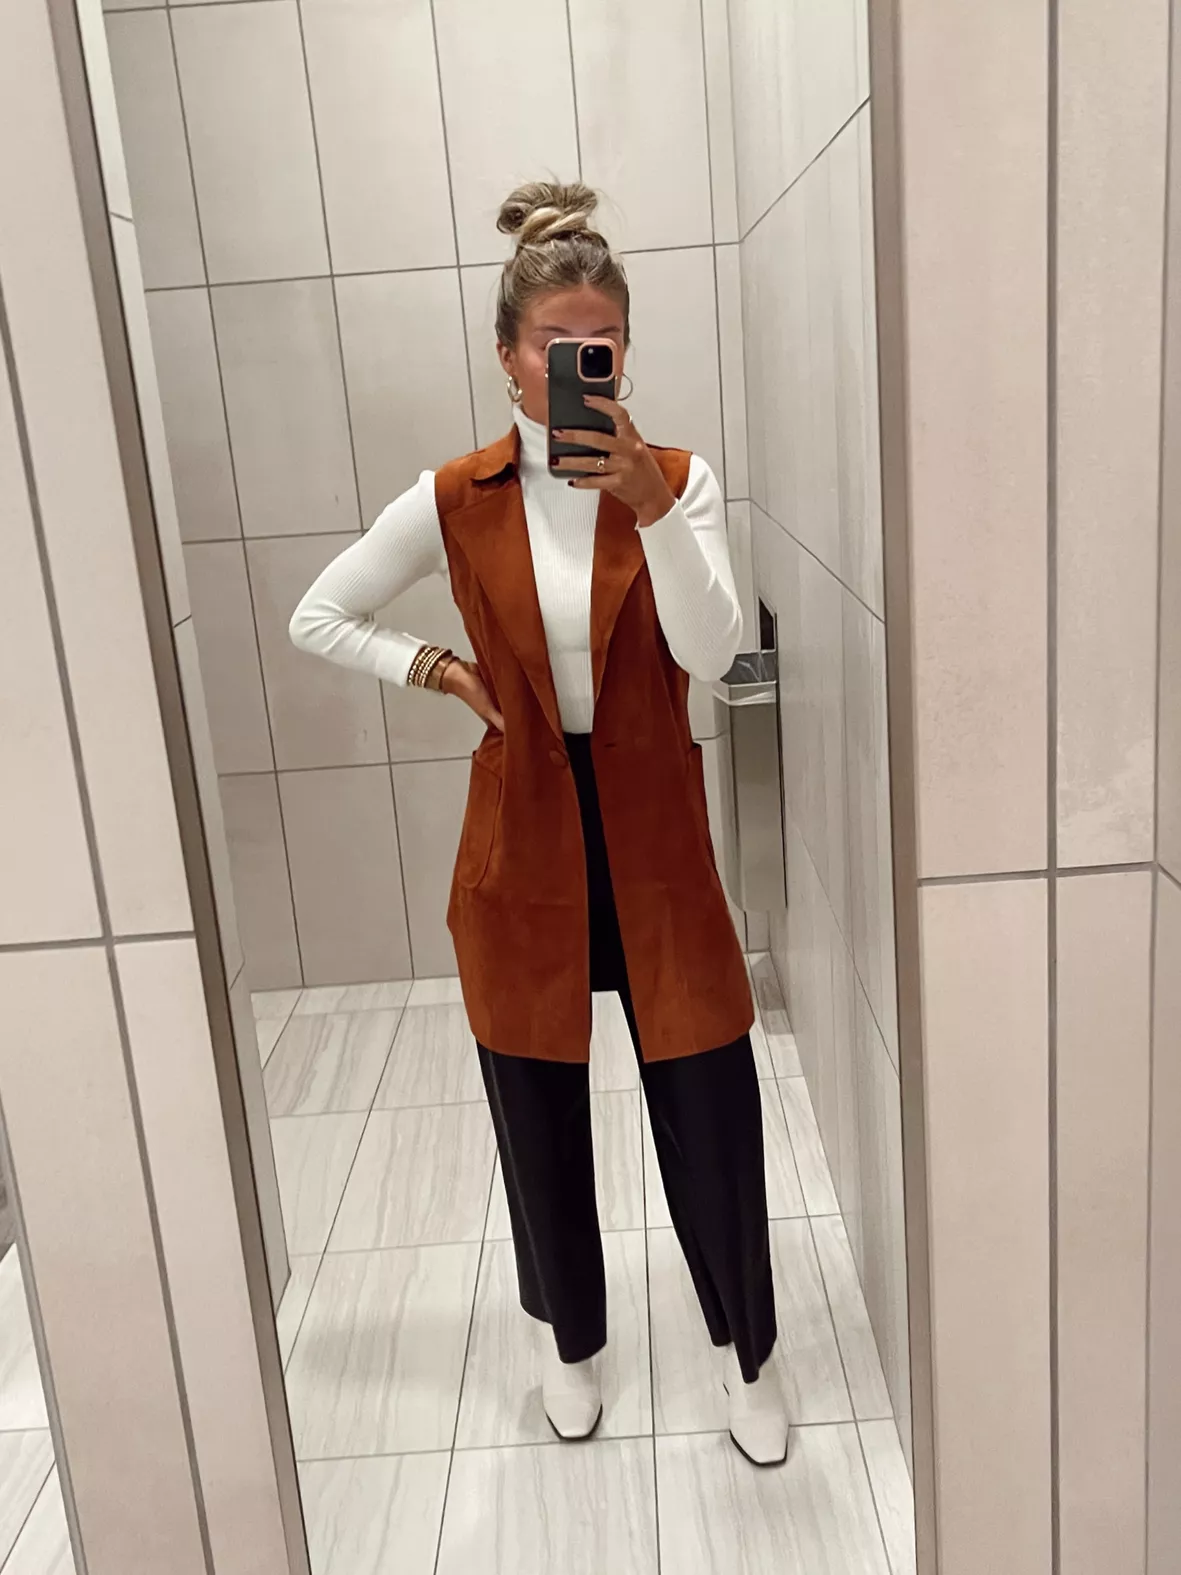 ZXZY Women Casual Sleeveless Open Front Tunic Vest Long Cardigan Tops Coat